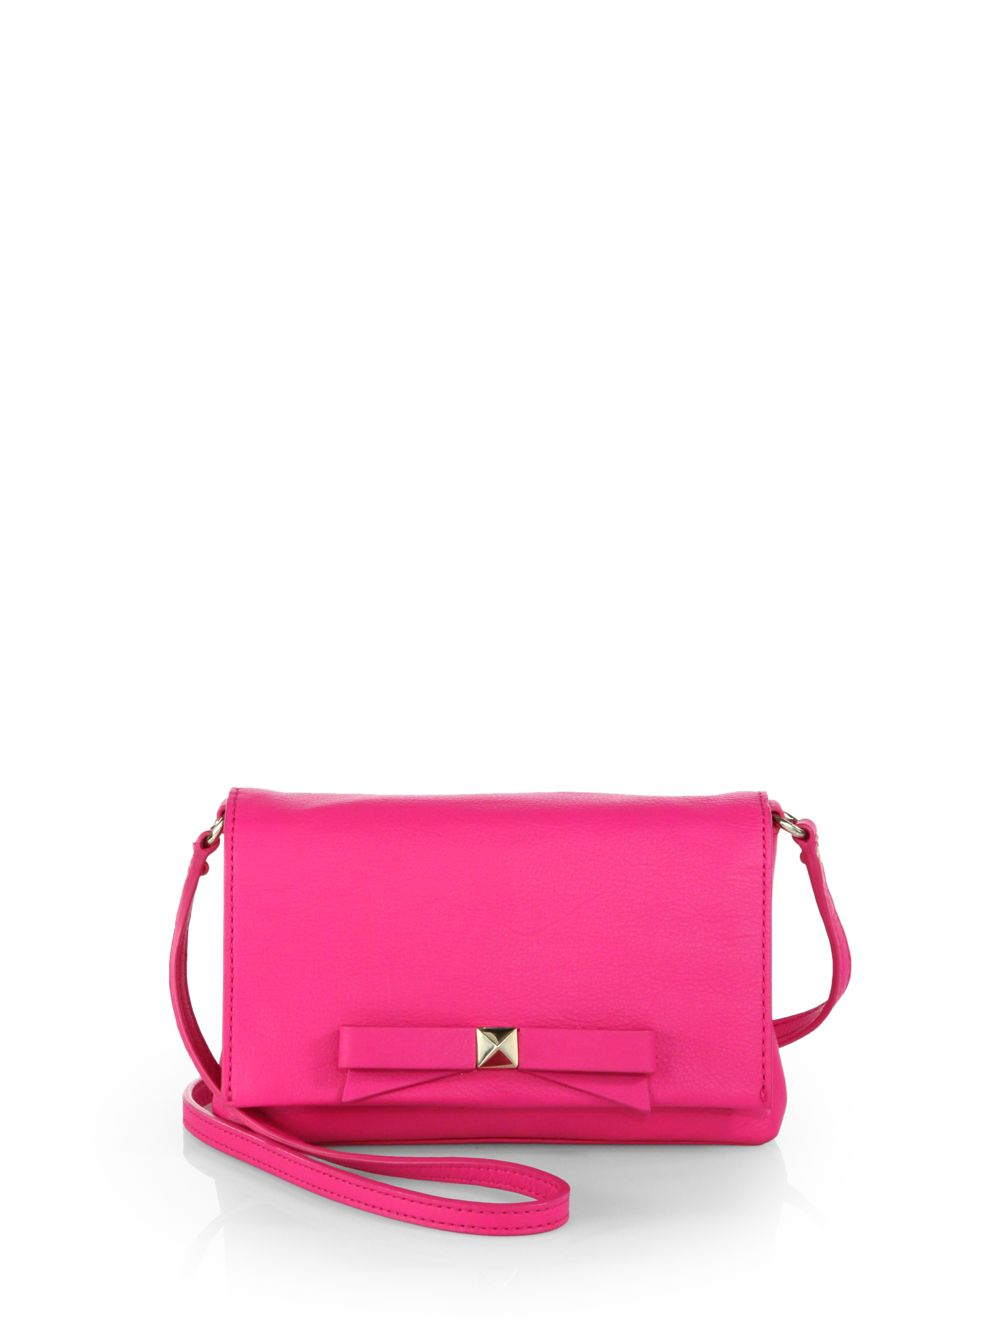 Kate spade Bright Light Carah Crossbody Bag in Pink (peony pink) | Lyst